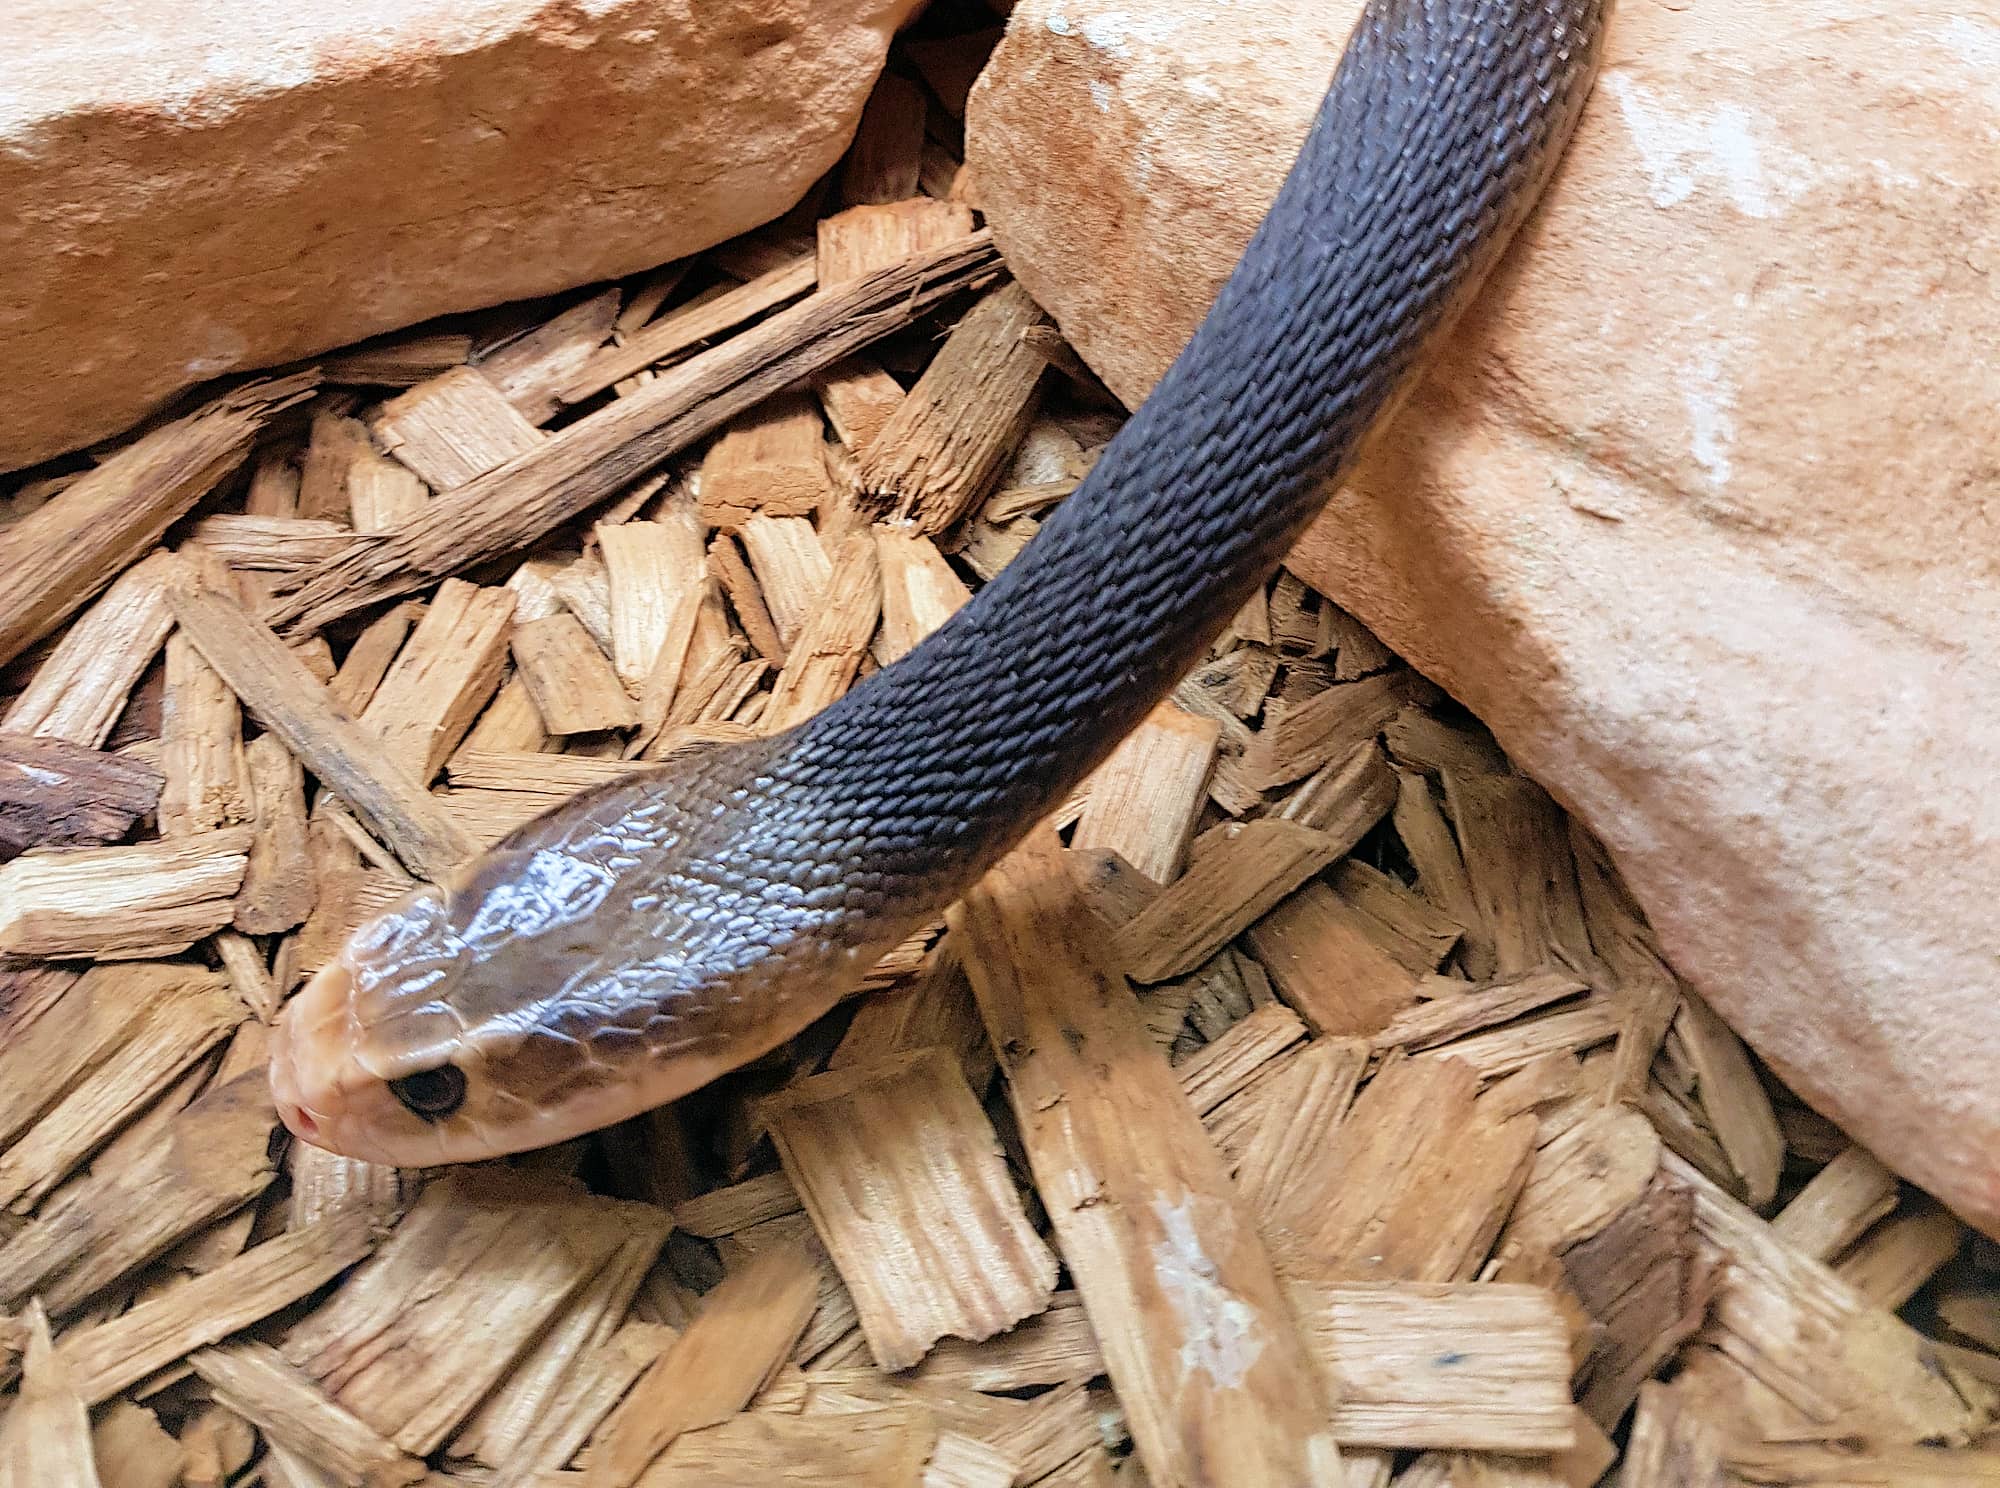 coastal taipan snake